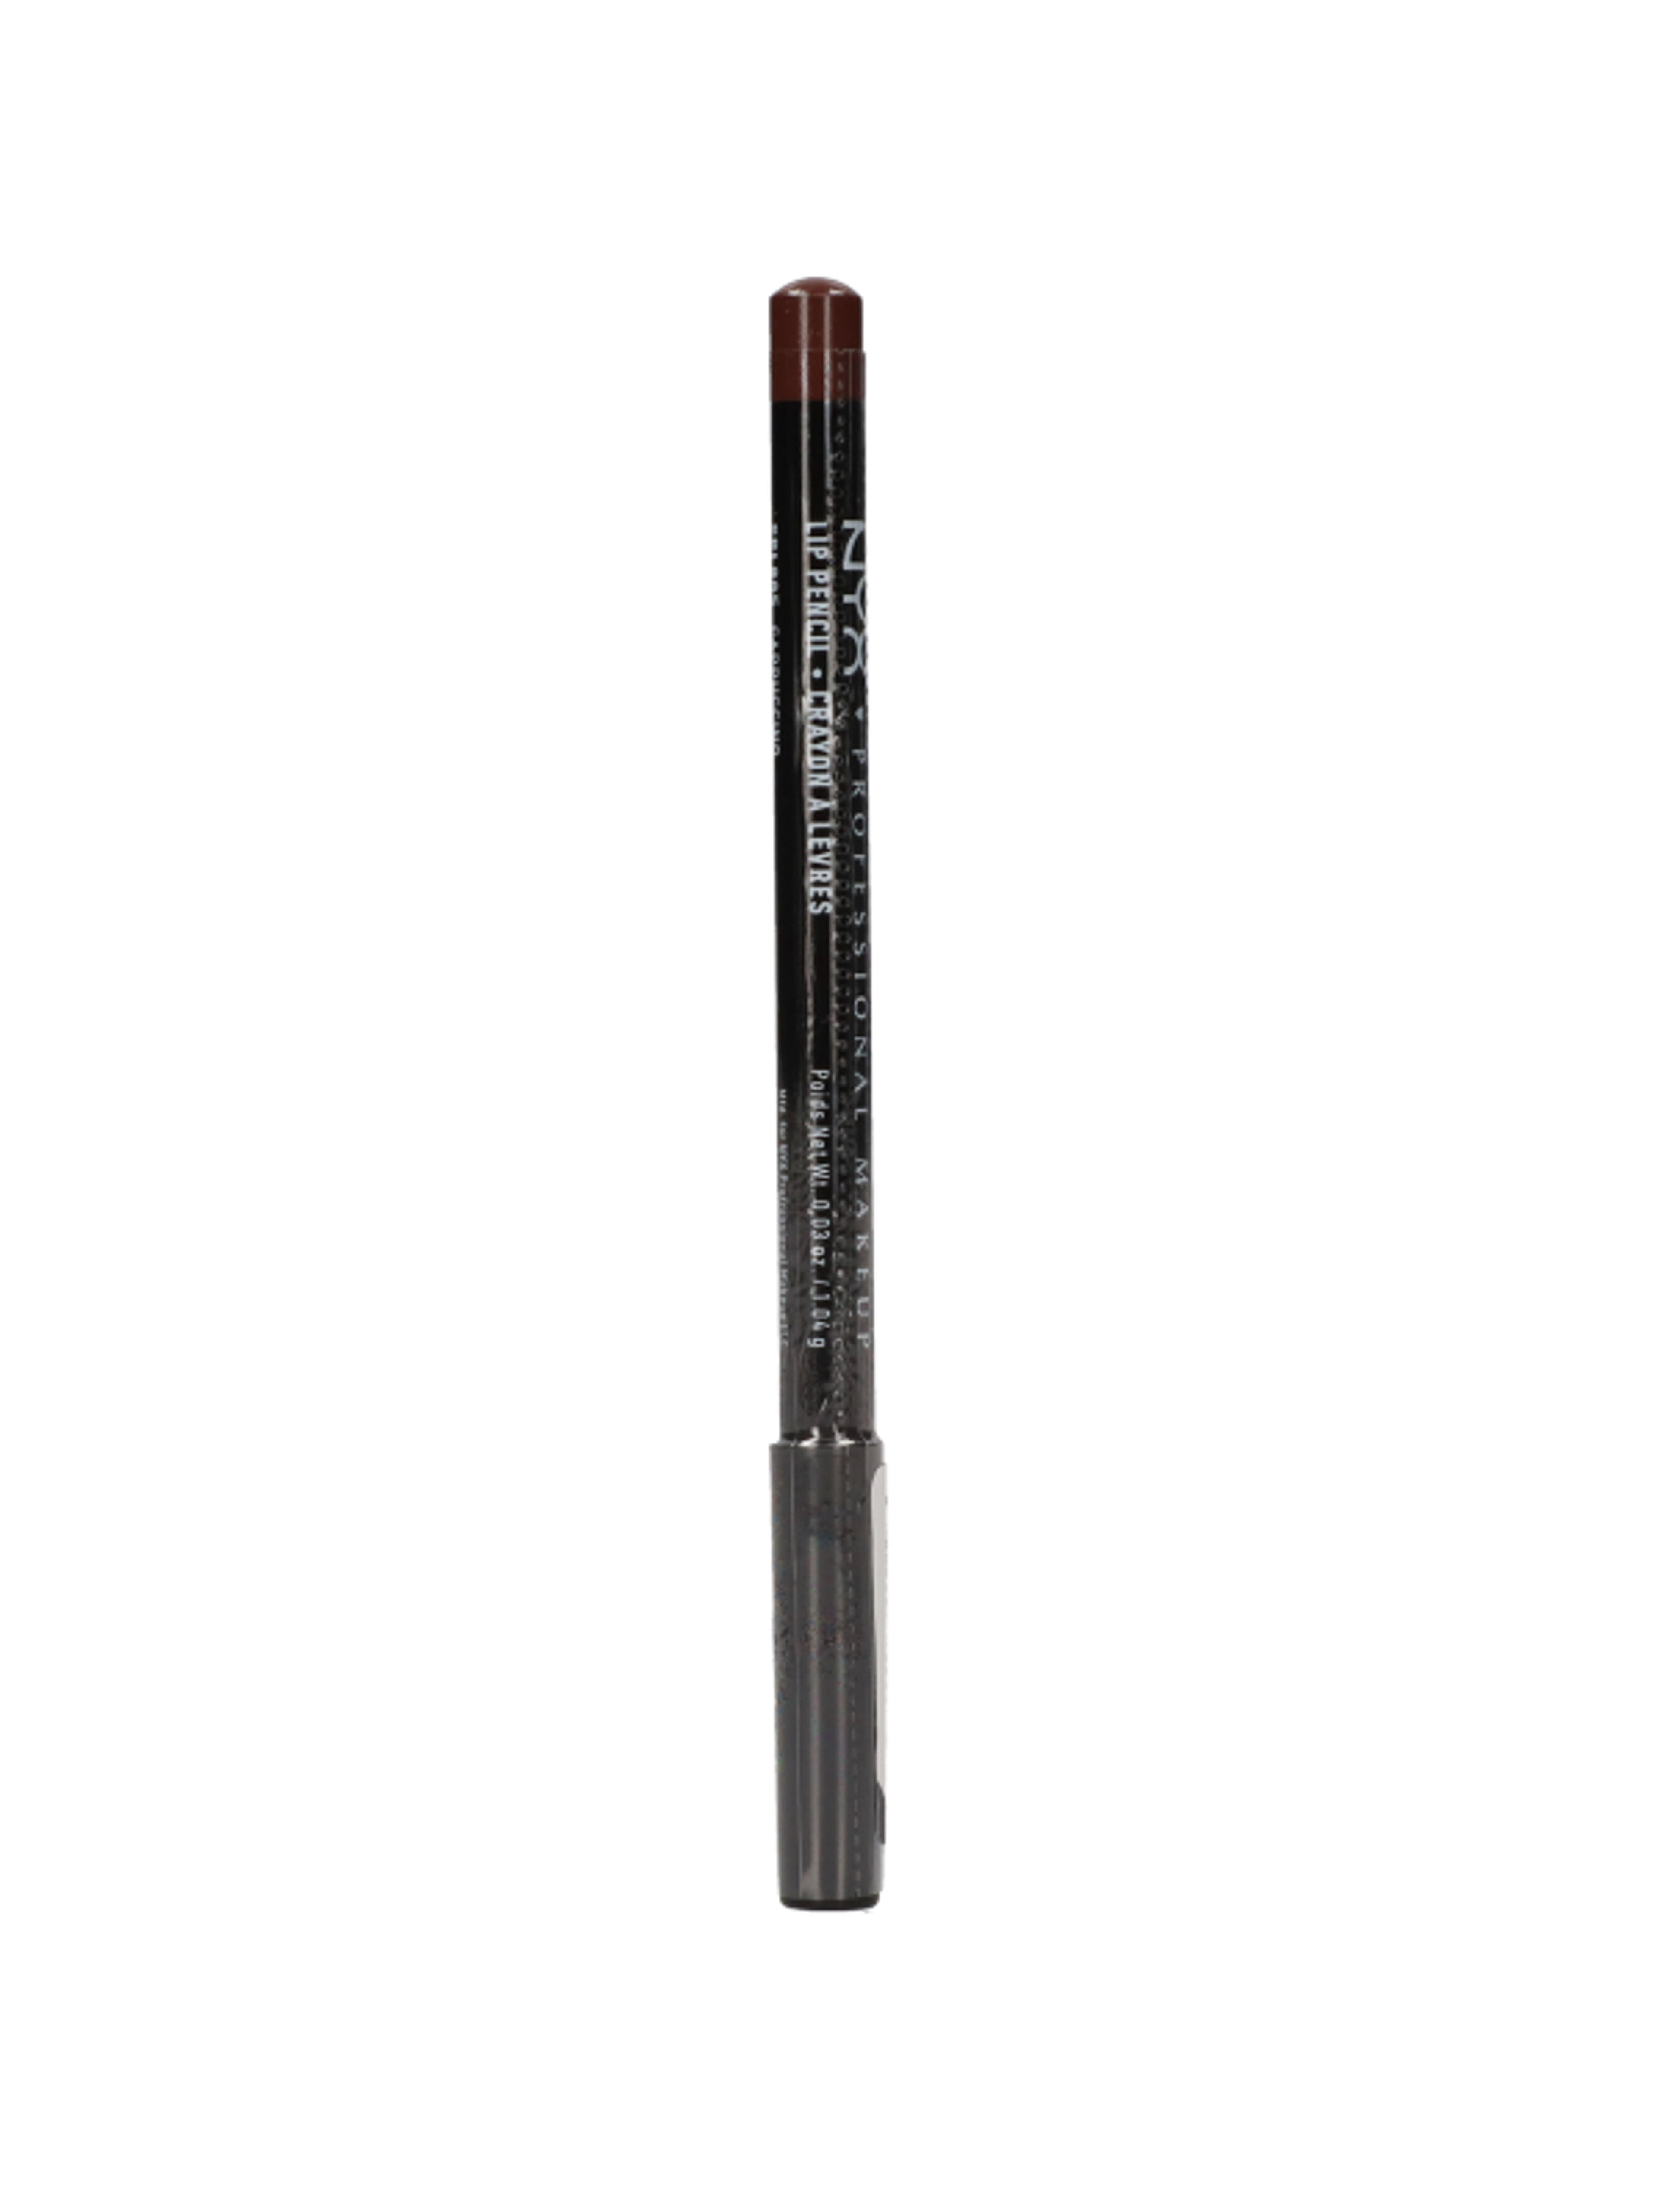 NYX Professional Makeup Slim Lip Pencil ajakkontúr ceruza, Capuccino - 1 db-6